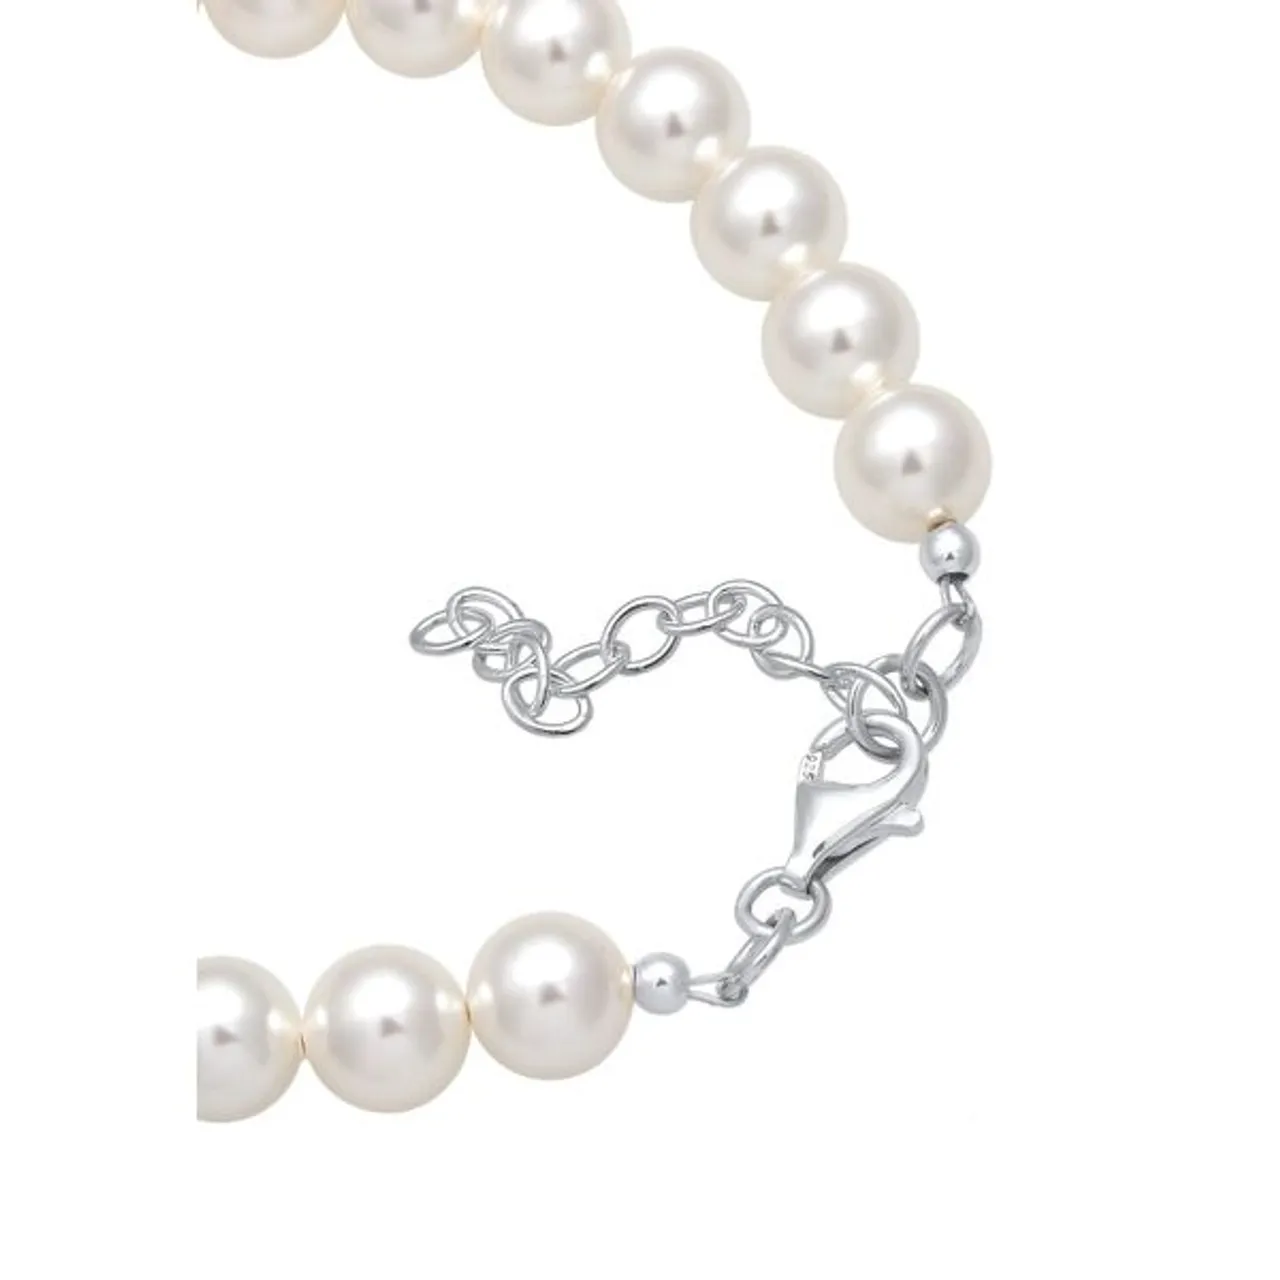 Perlenarmband ELLI "Imitationsperlen 925 Silber" Armbänder Gr. 19 cm, ohne Stein, Silber 925 (Sterlingsilber), weiß (weiß, weiß) Damen Perlenarmbänder